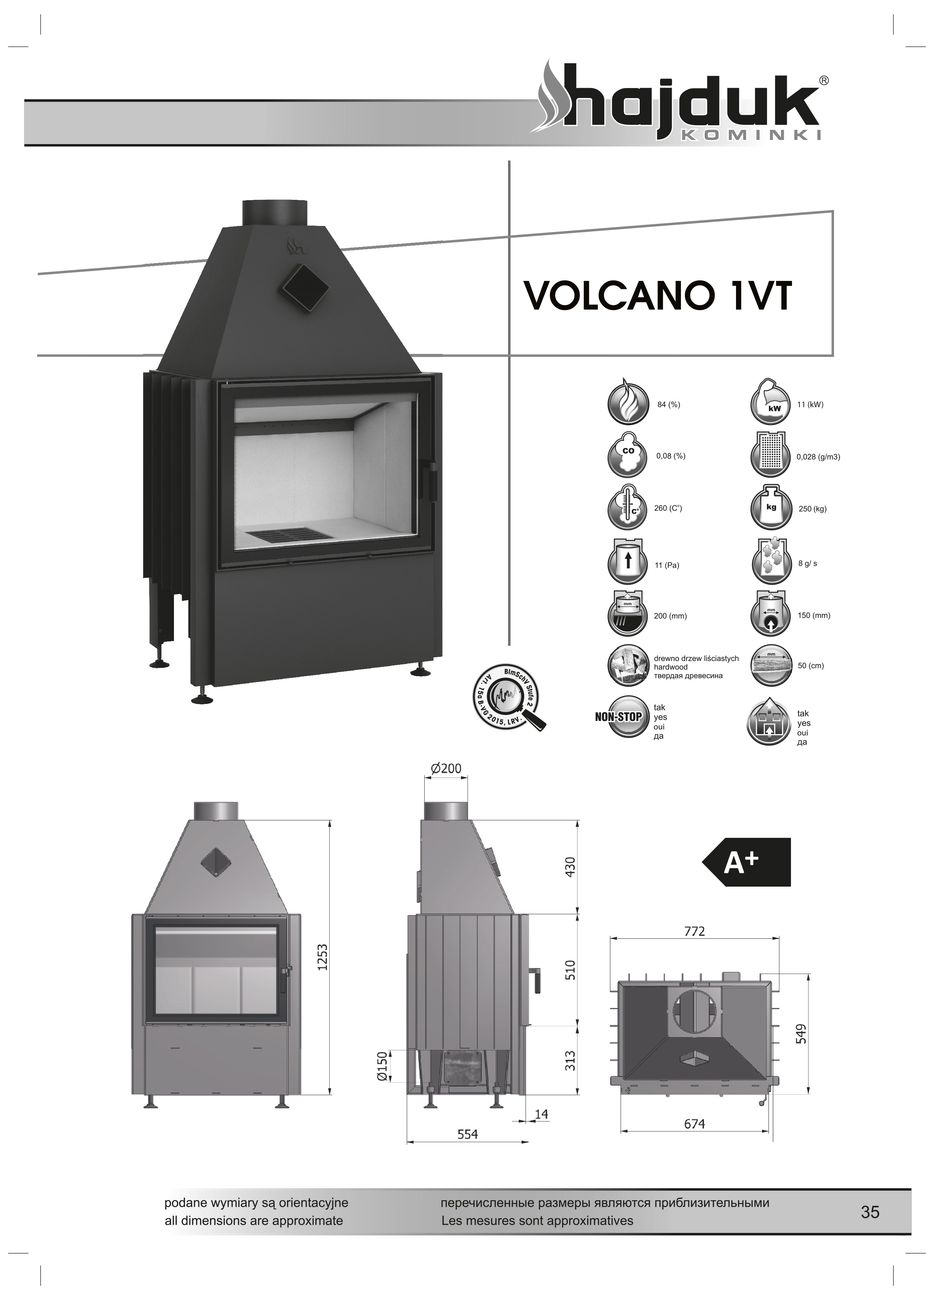 Hajduk Volcano 1 VT wymiary wkładu kominkowego Hajduk Volcano 1VT